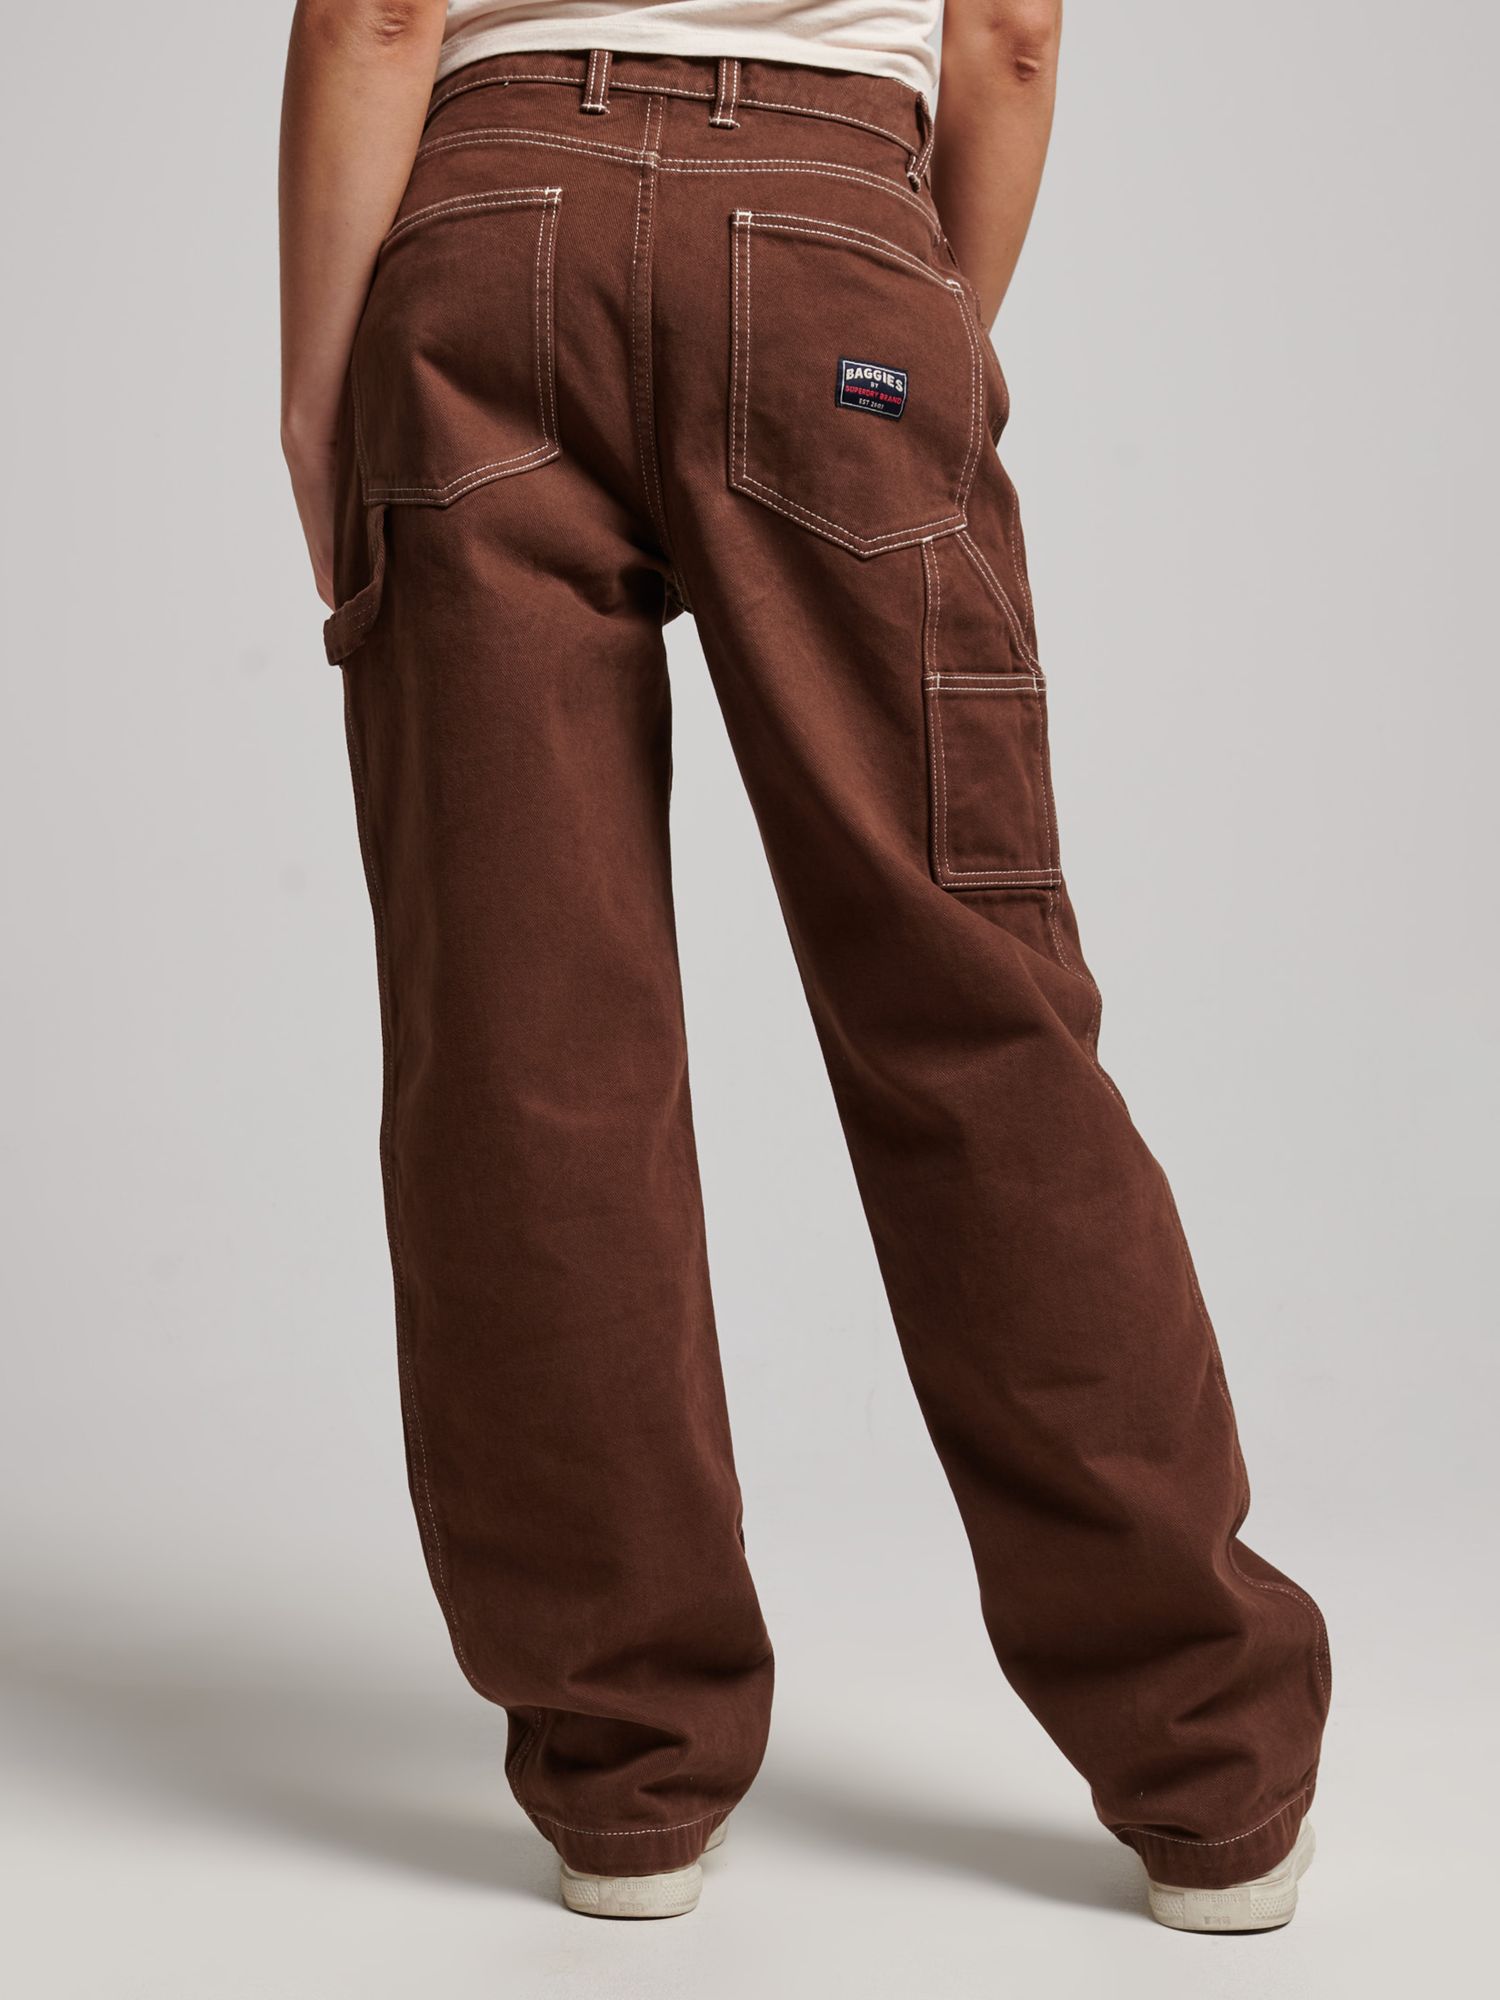 Women's Contrast Carpenter Pants in Pinecone Brown